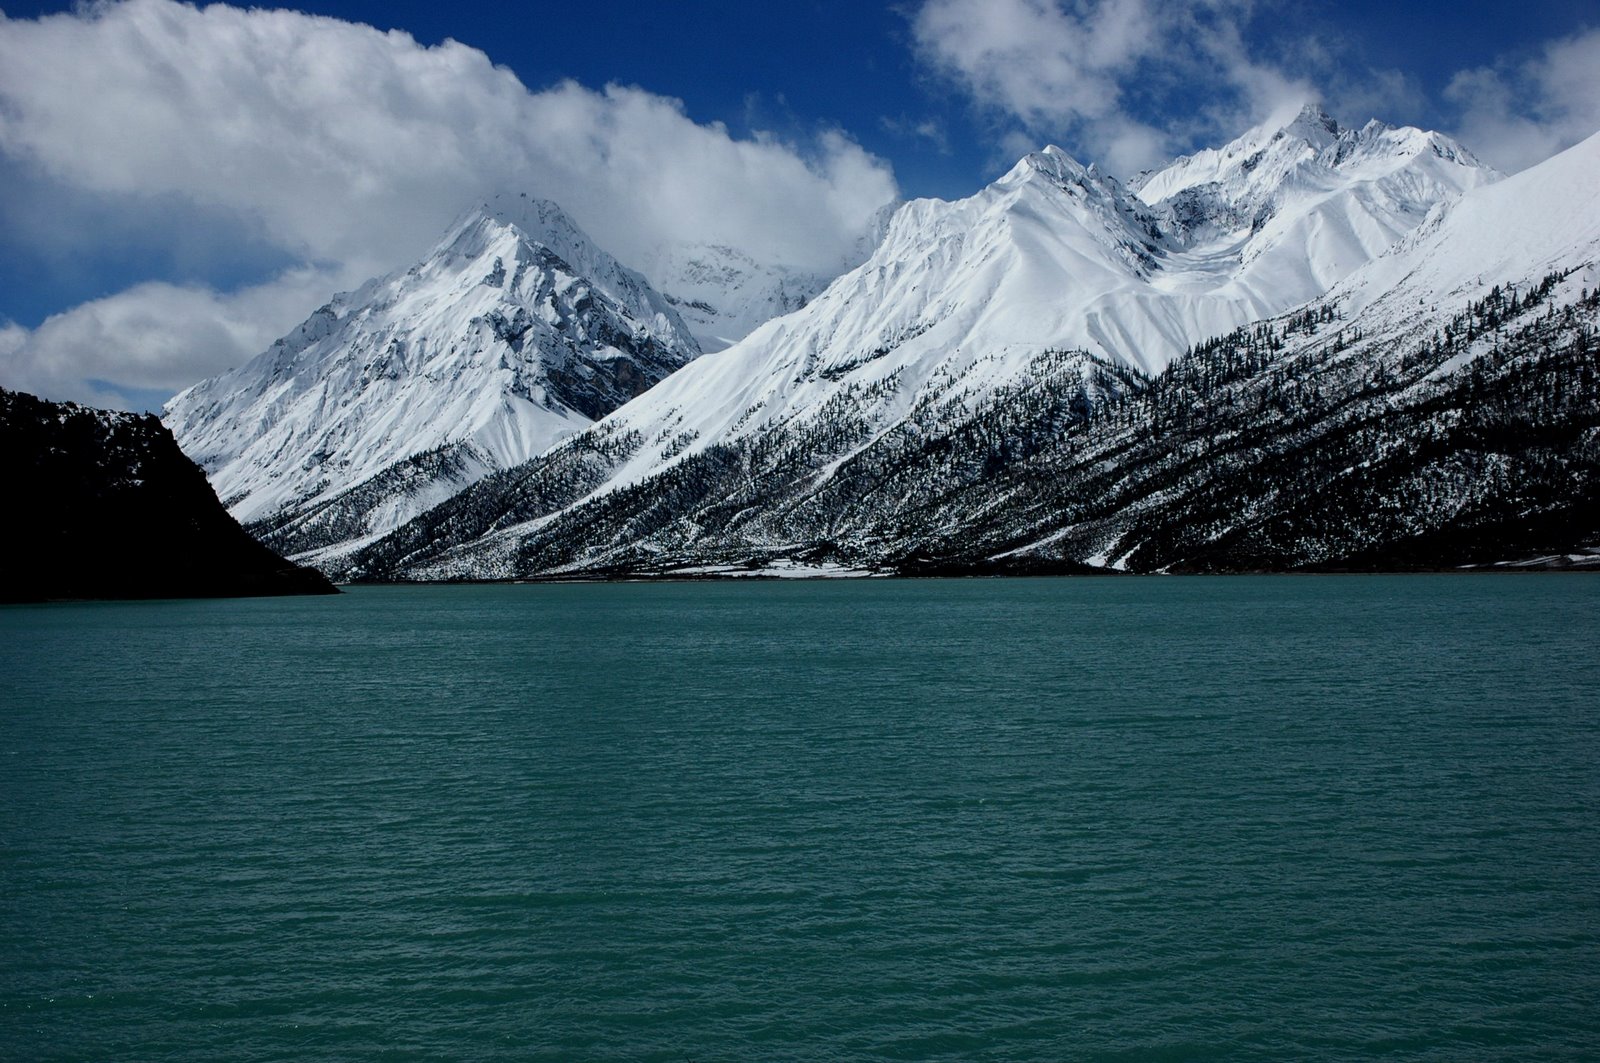 scenery of Tibet